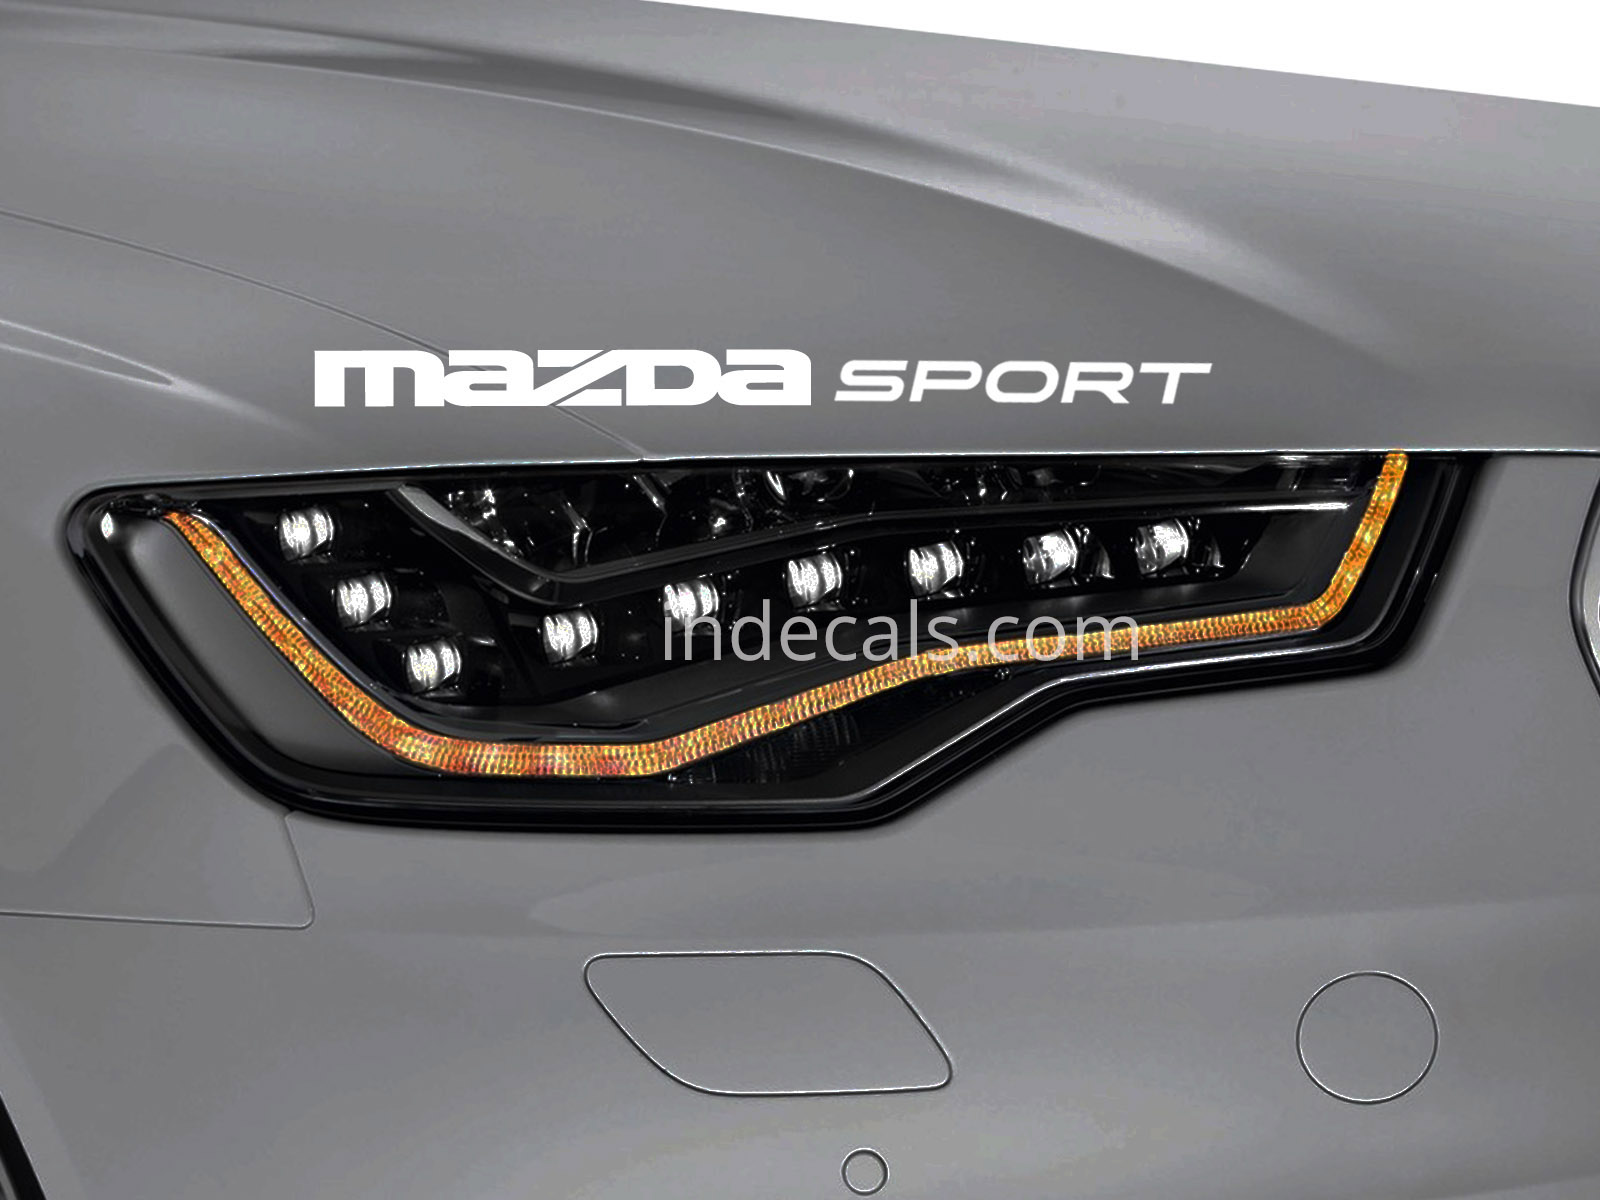 1 x Mazda Sport Sticker for Eyebrow - White